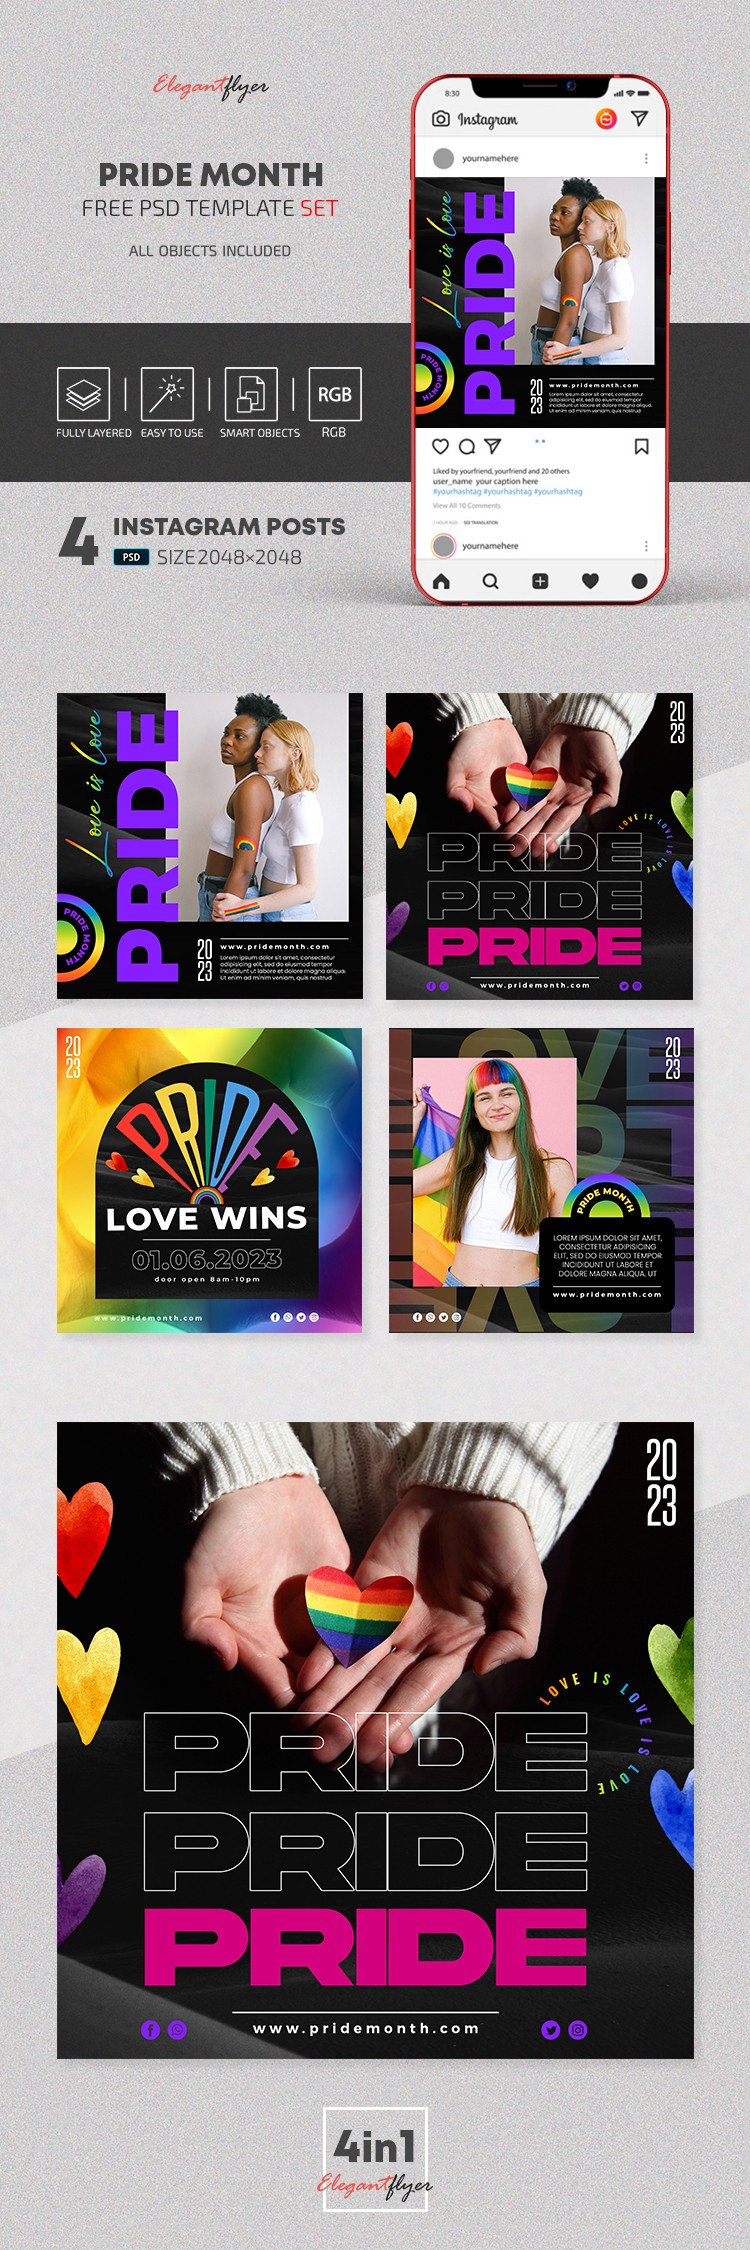 Pride Month Instagram Post by ElegantFlyer